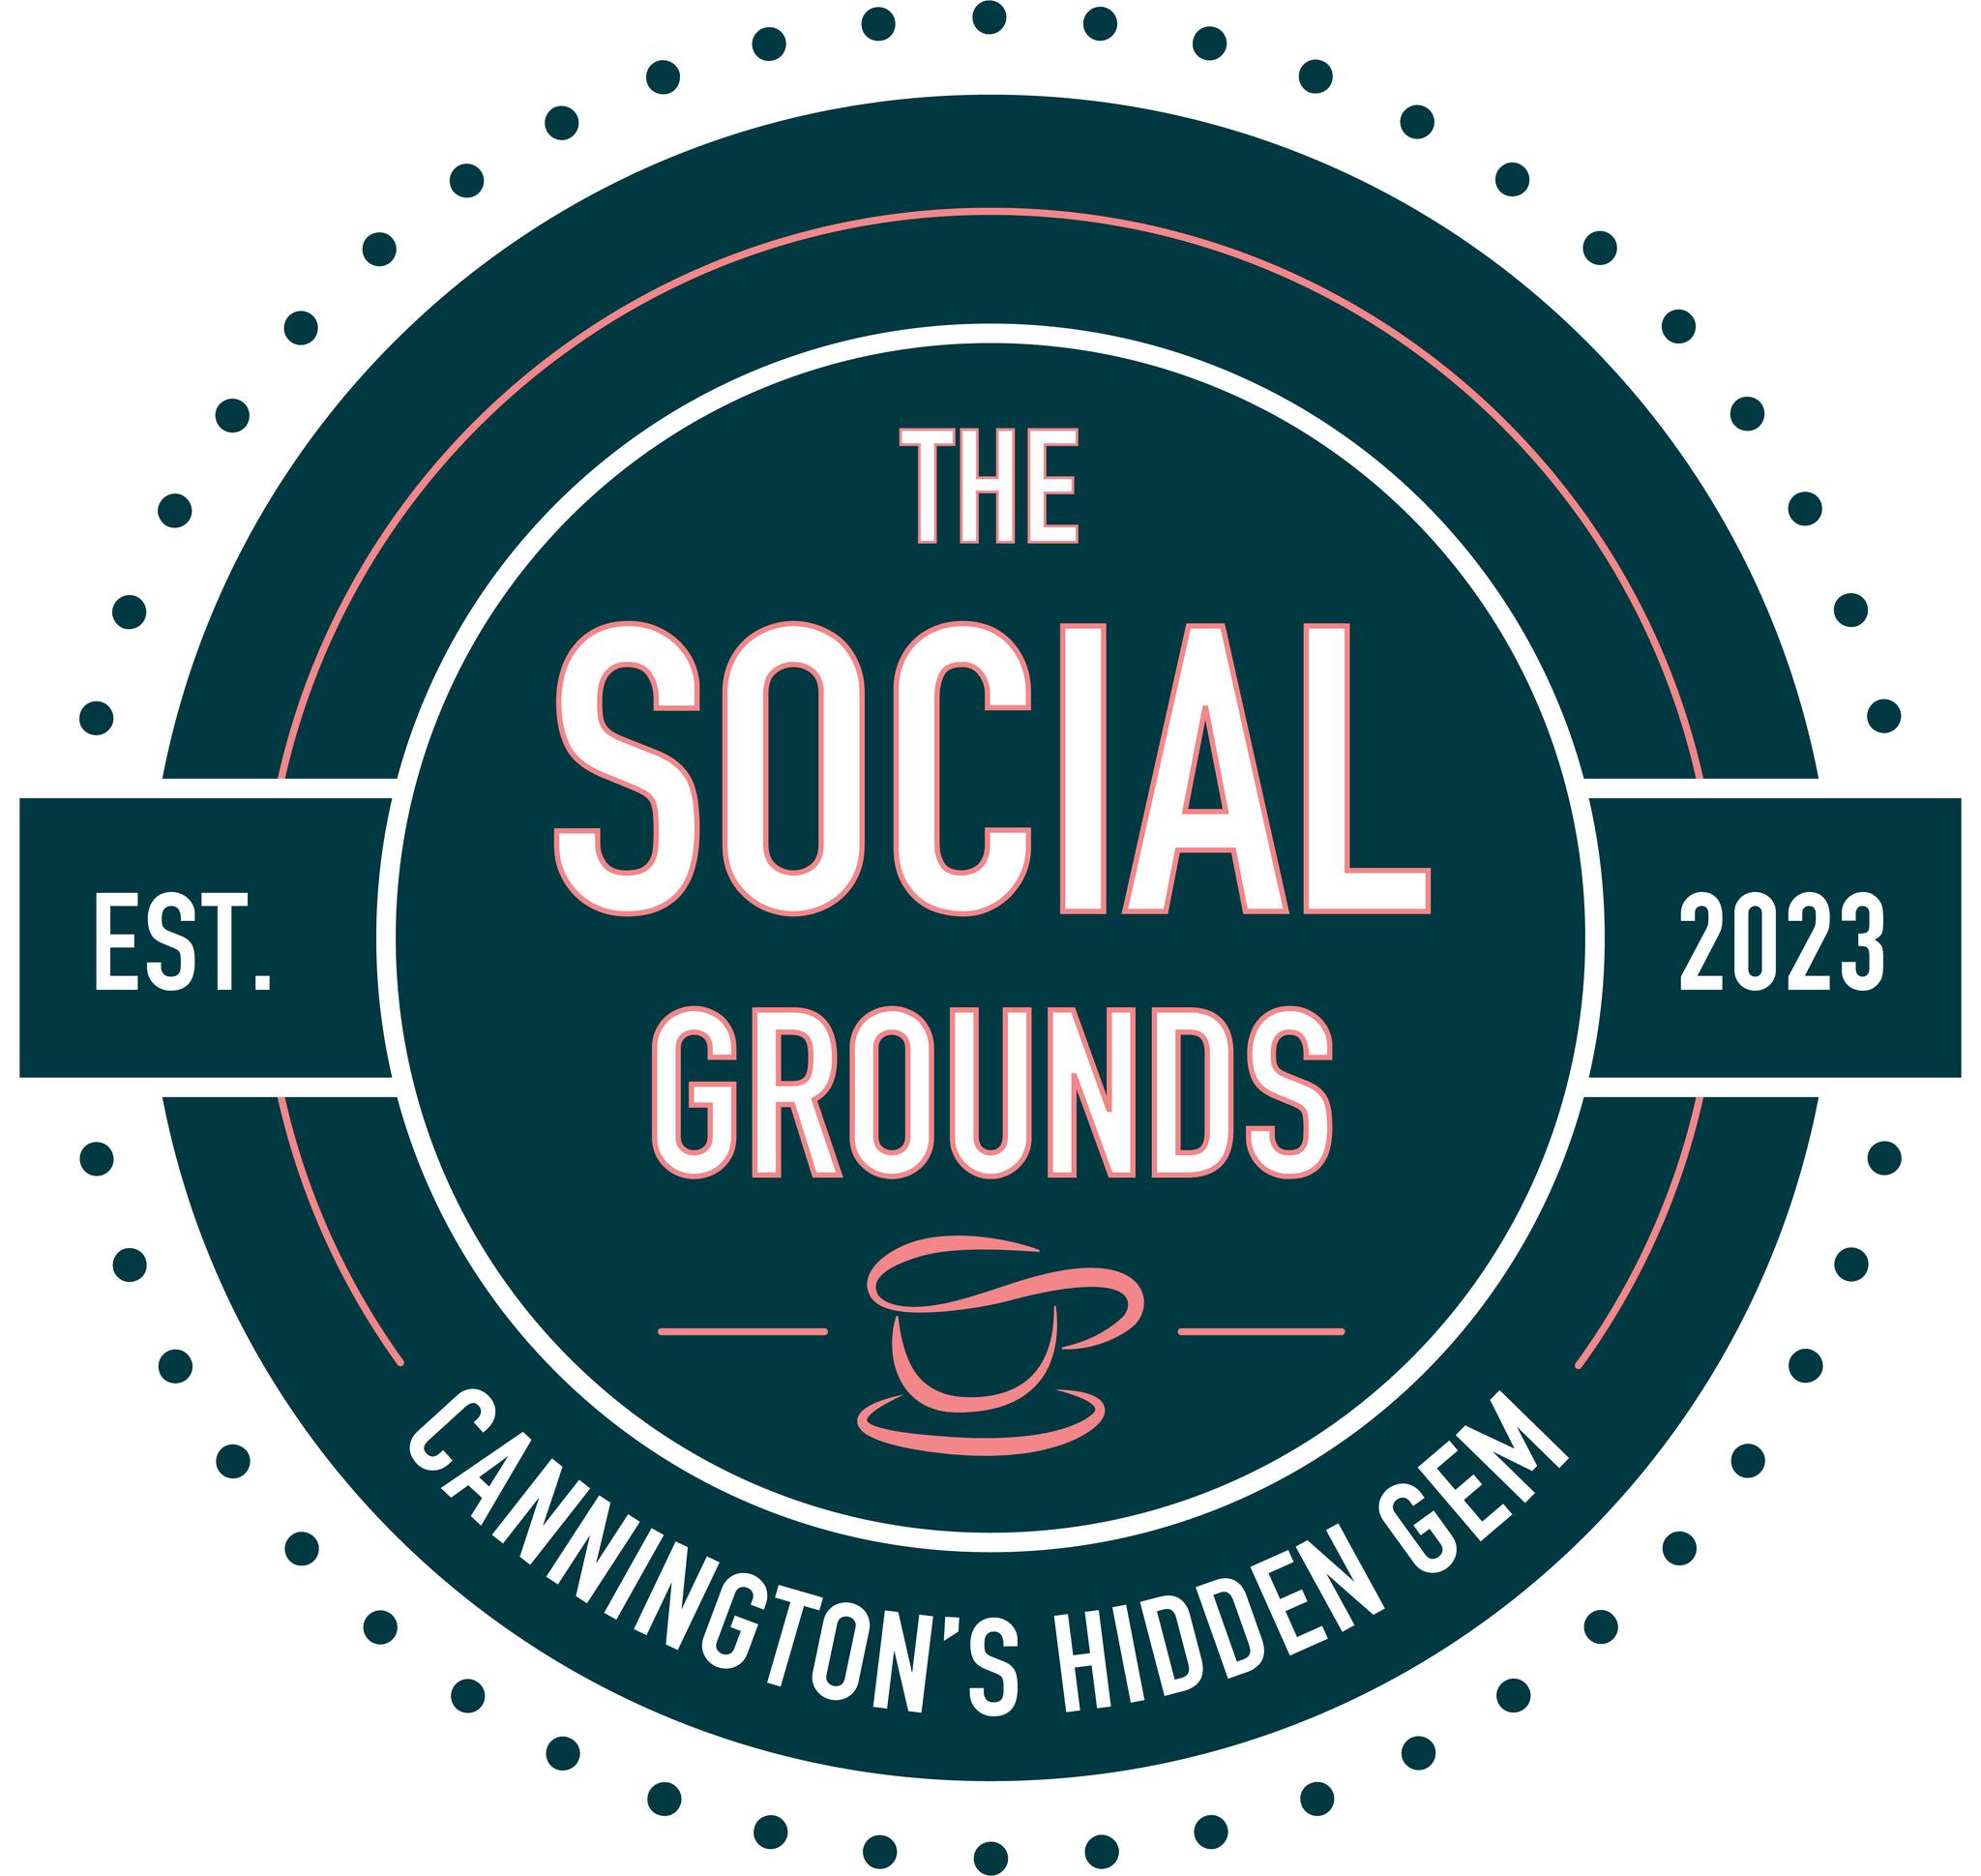 The Social Grounds Cafe logo.